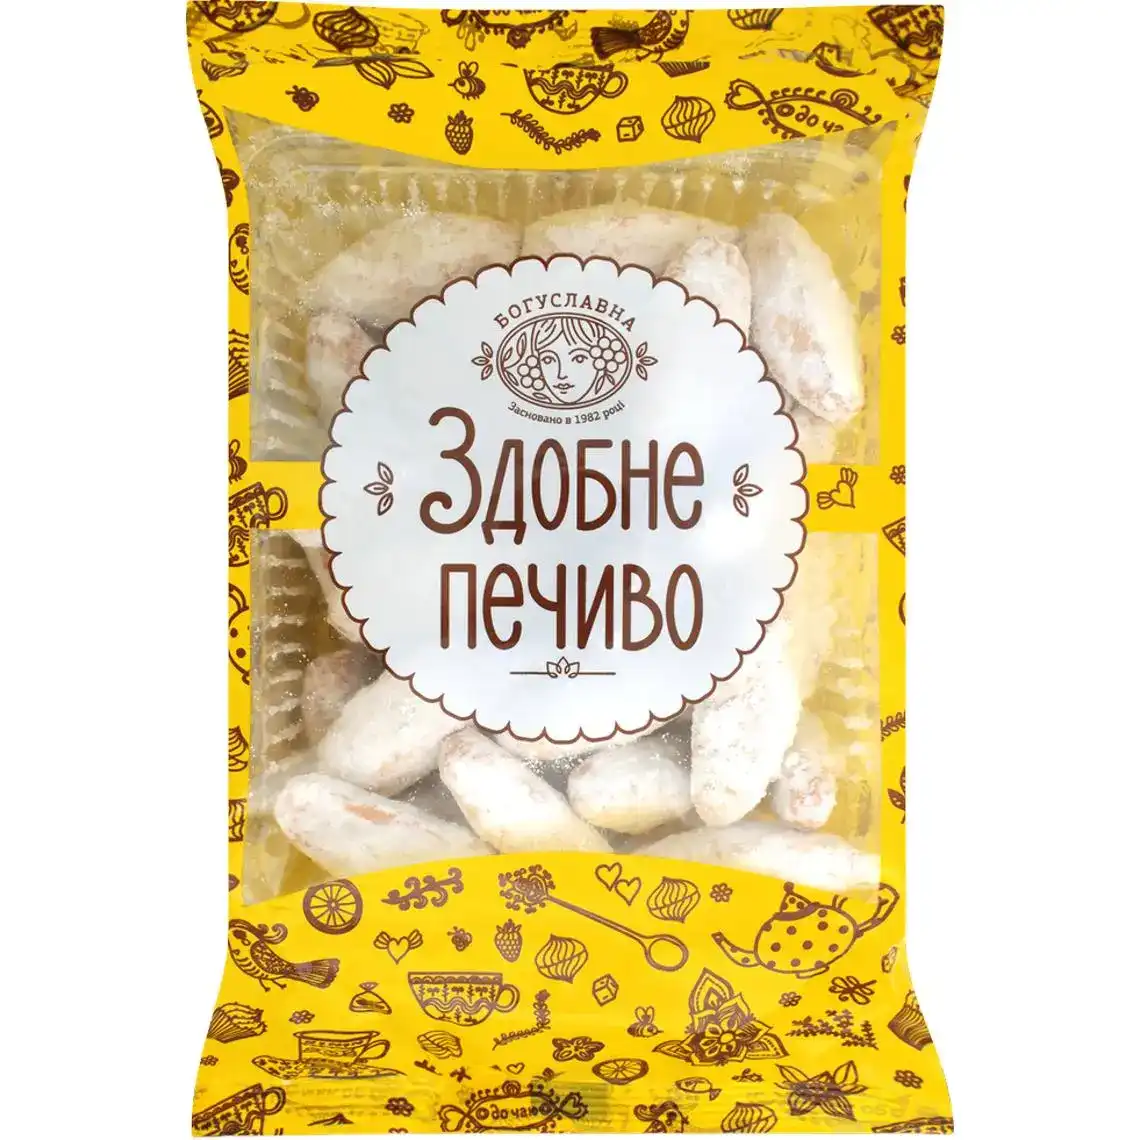 Печиво Богуславна Білосніжка здобне в цукровій пудрі 350 г